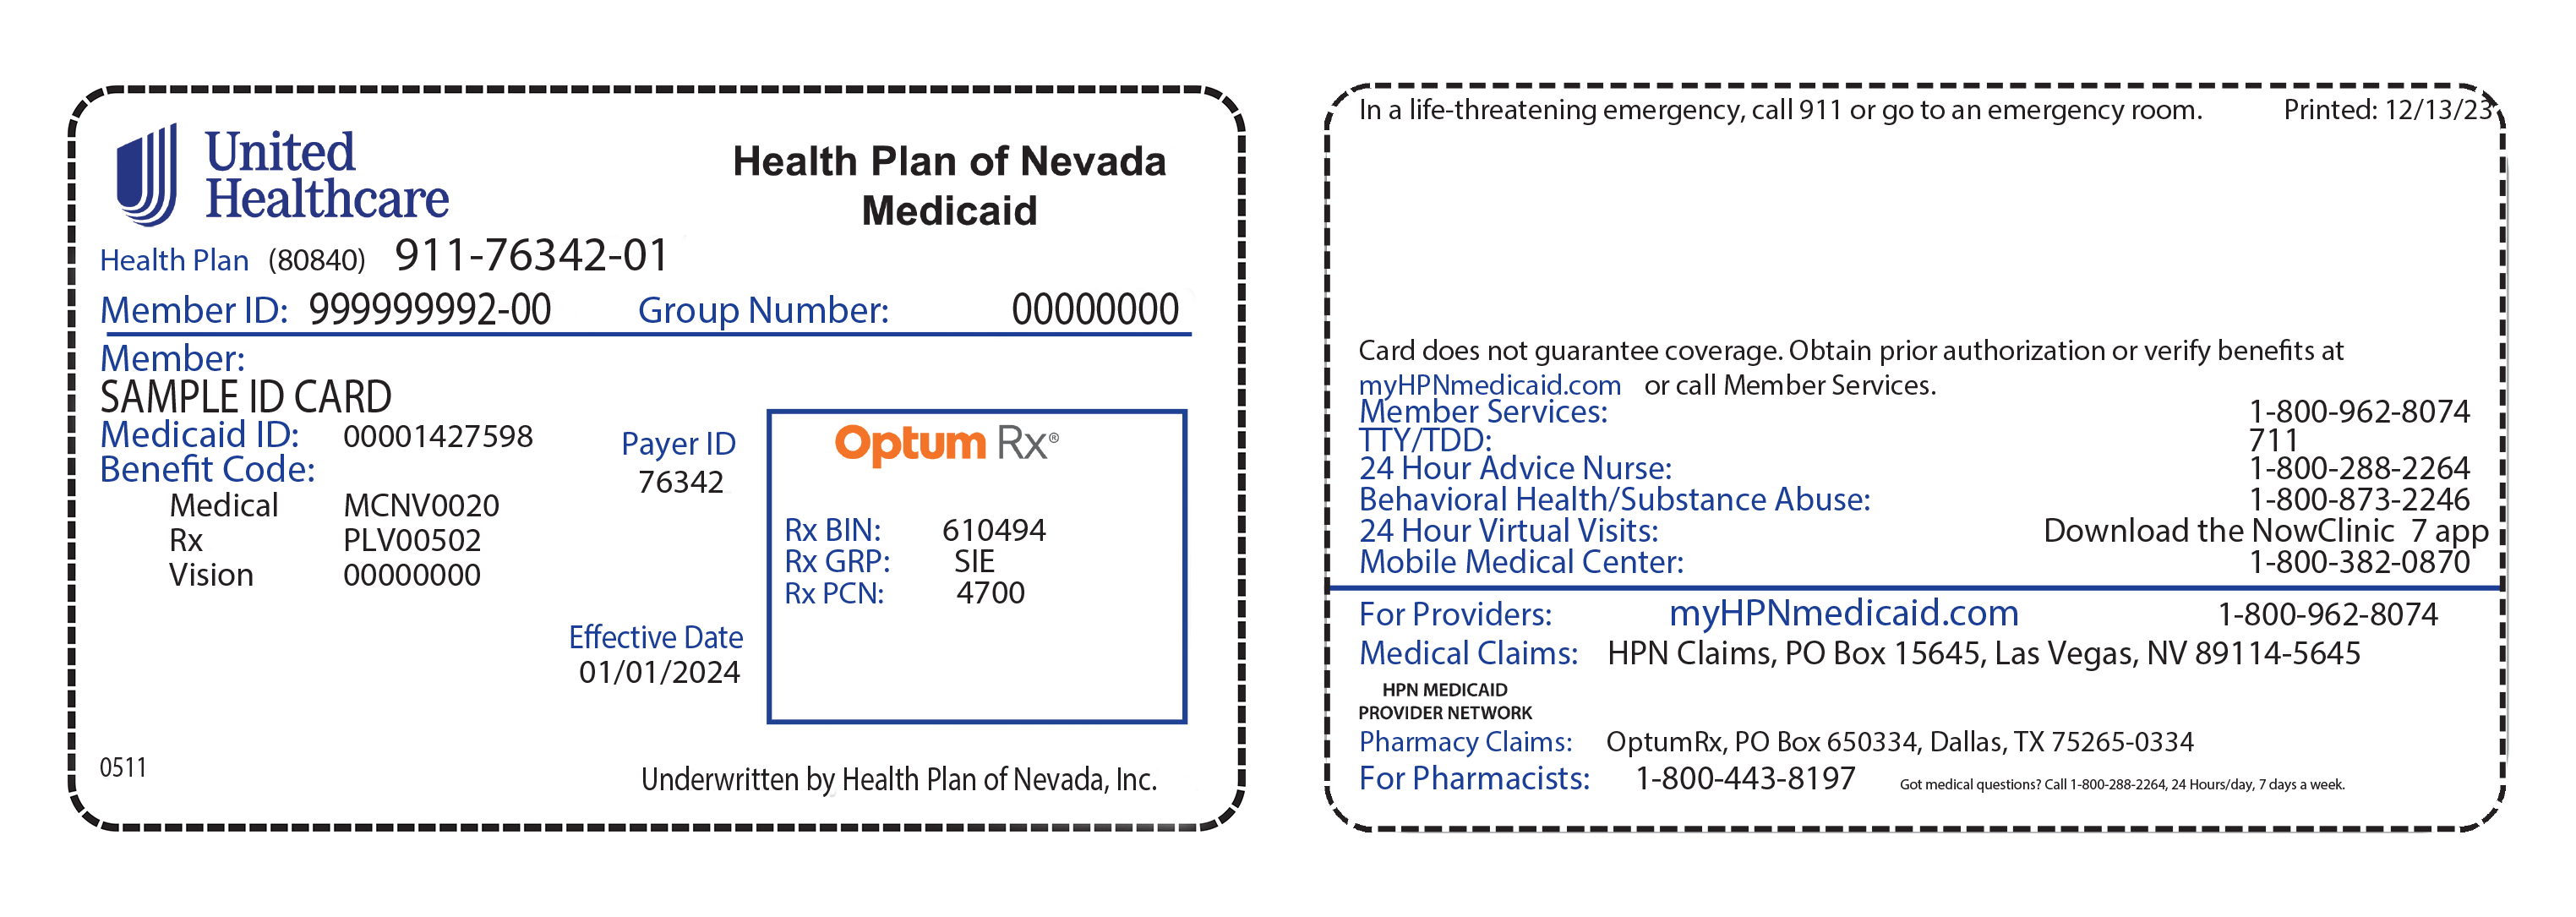 UnitedHealthcare Health Plan of Nevada Medicaid Health Plan ID card example